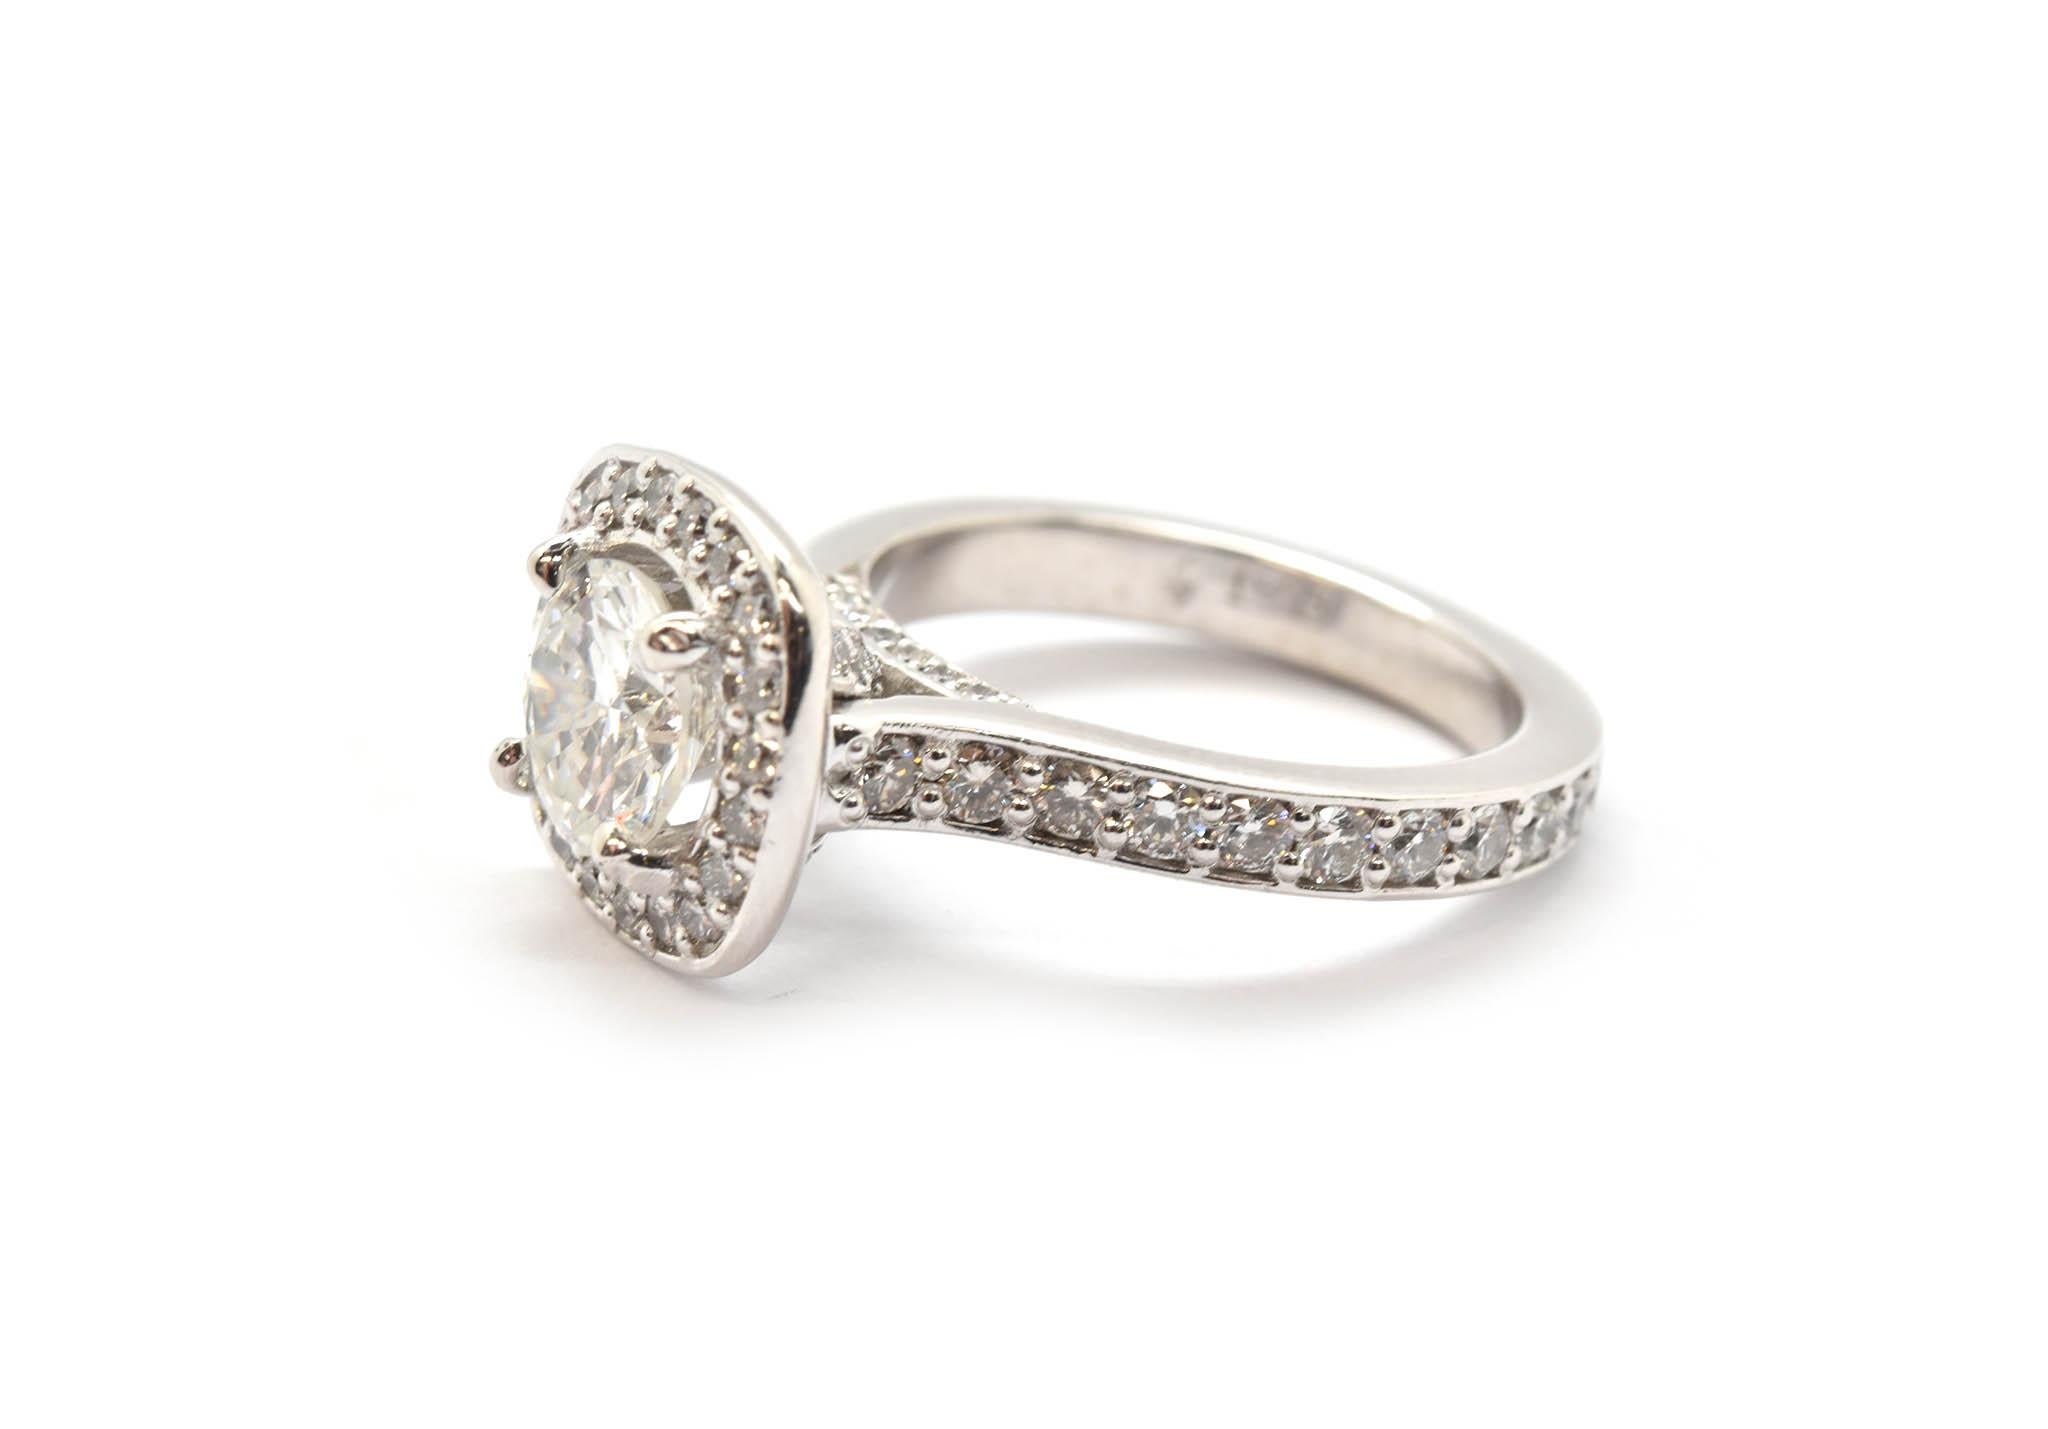 0.98 carat diamond ring